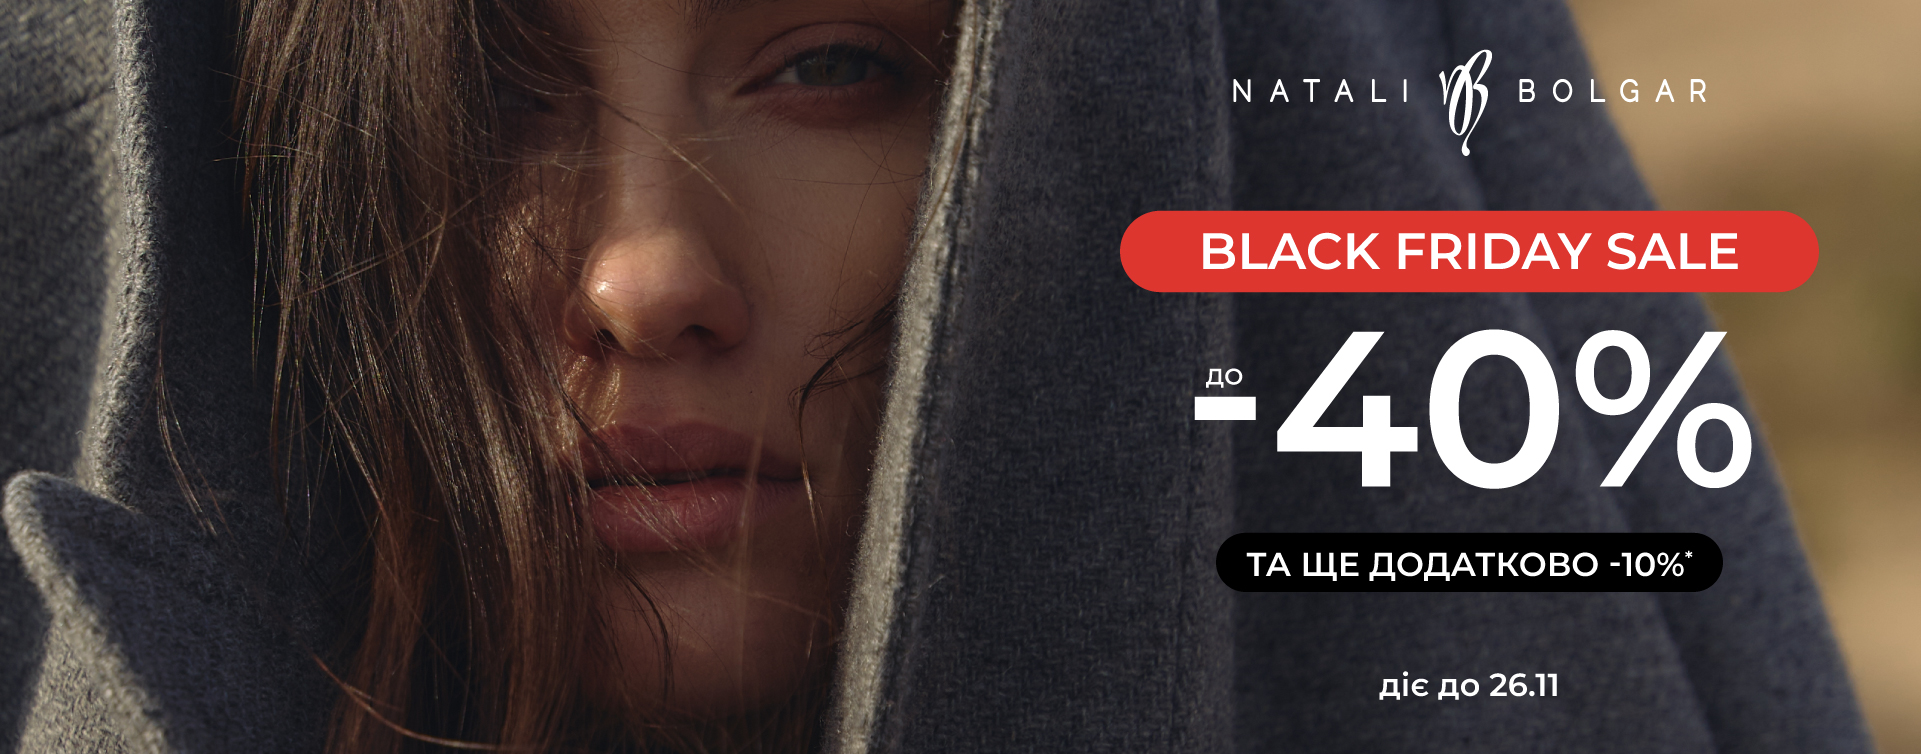 Natali Bolgar на Black Friday sale